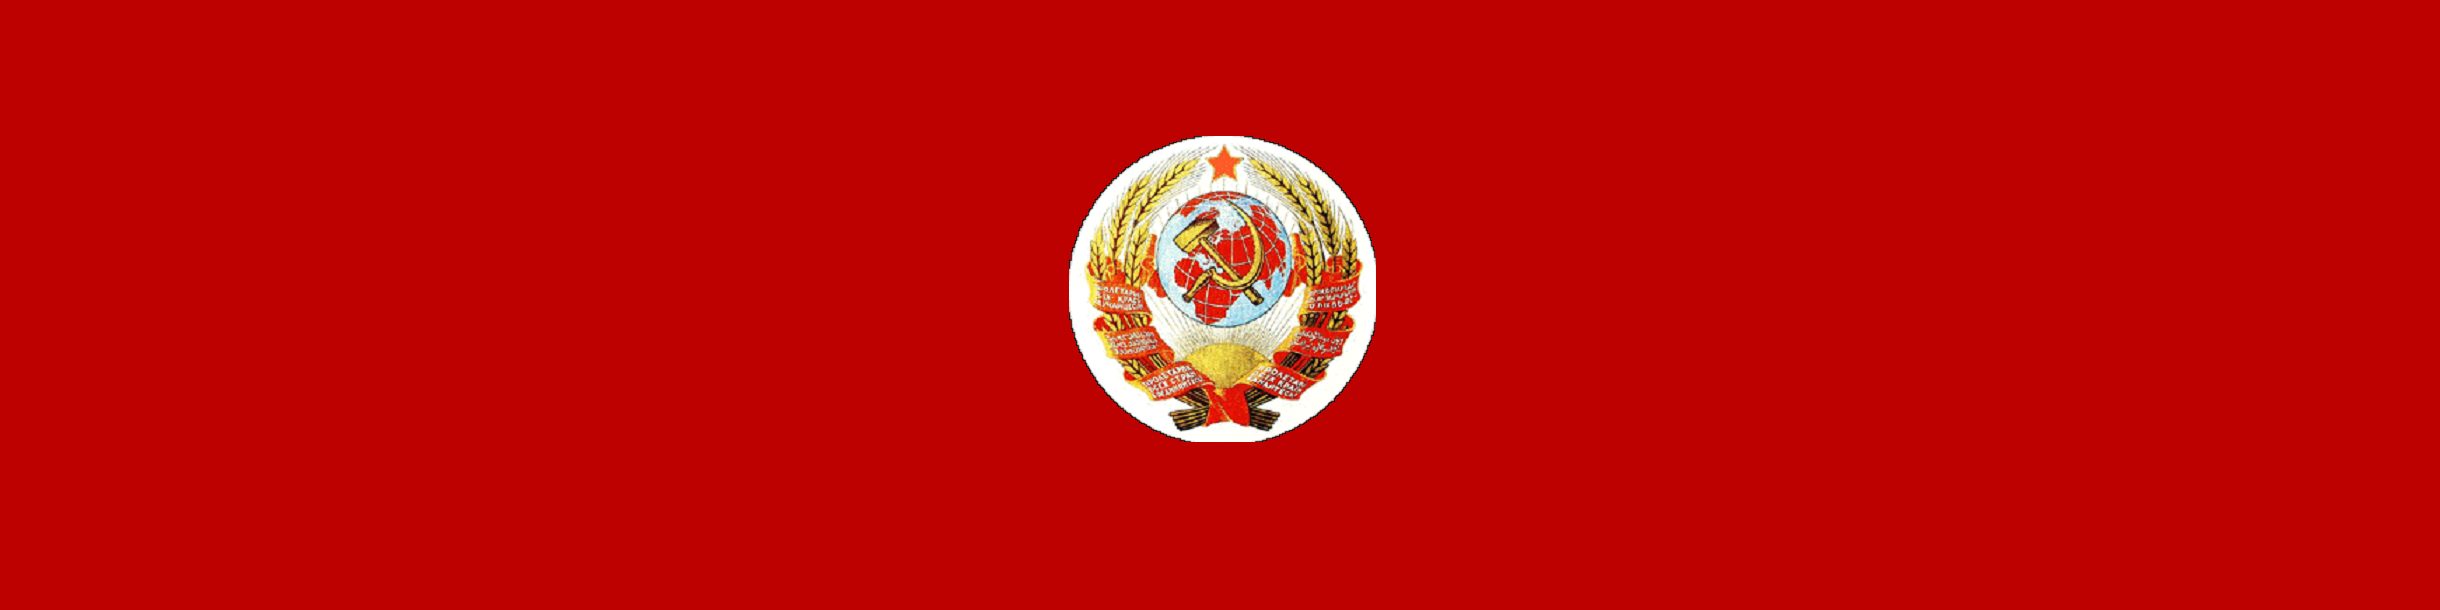 Flag of the Soviet Union - Wikipedia